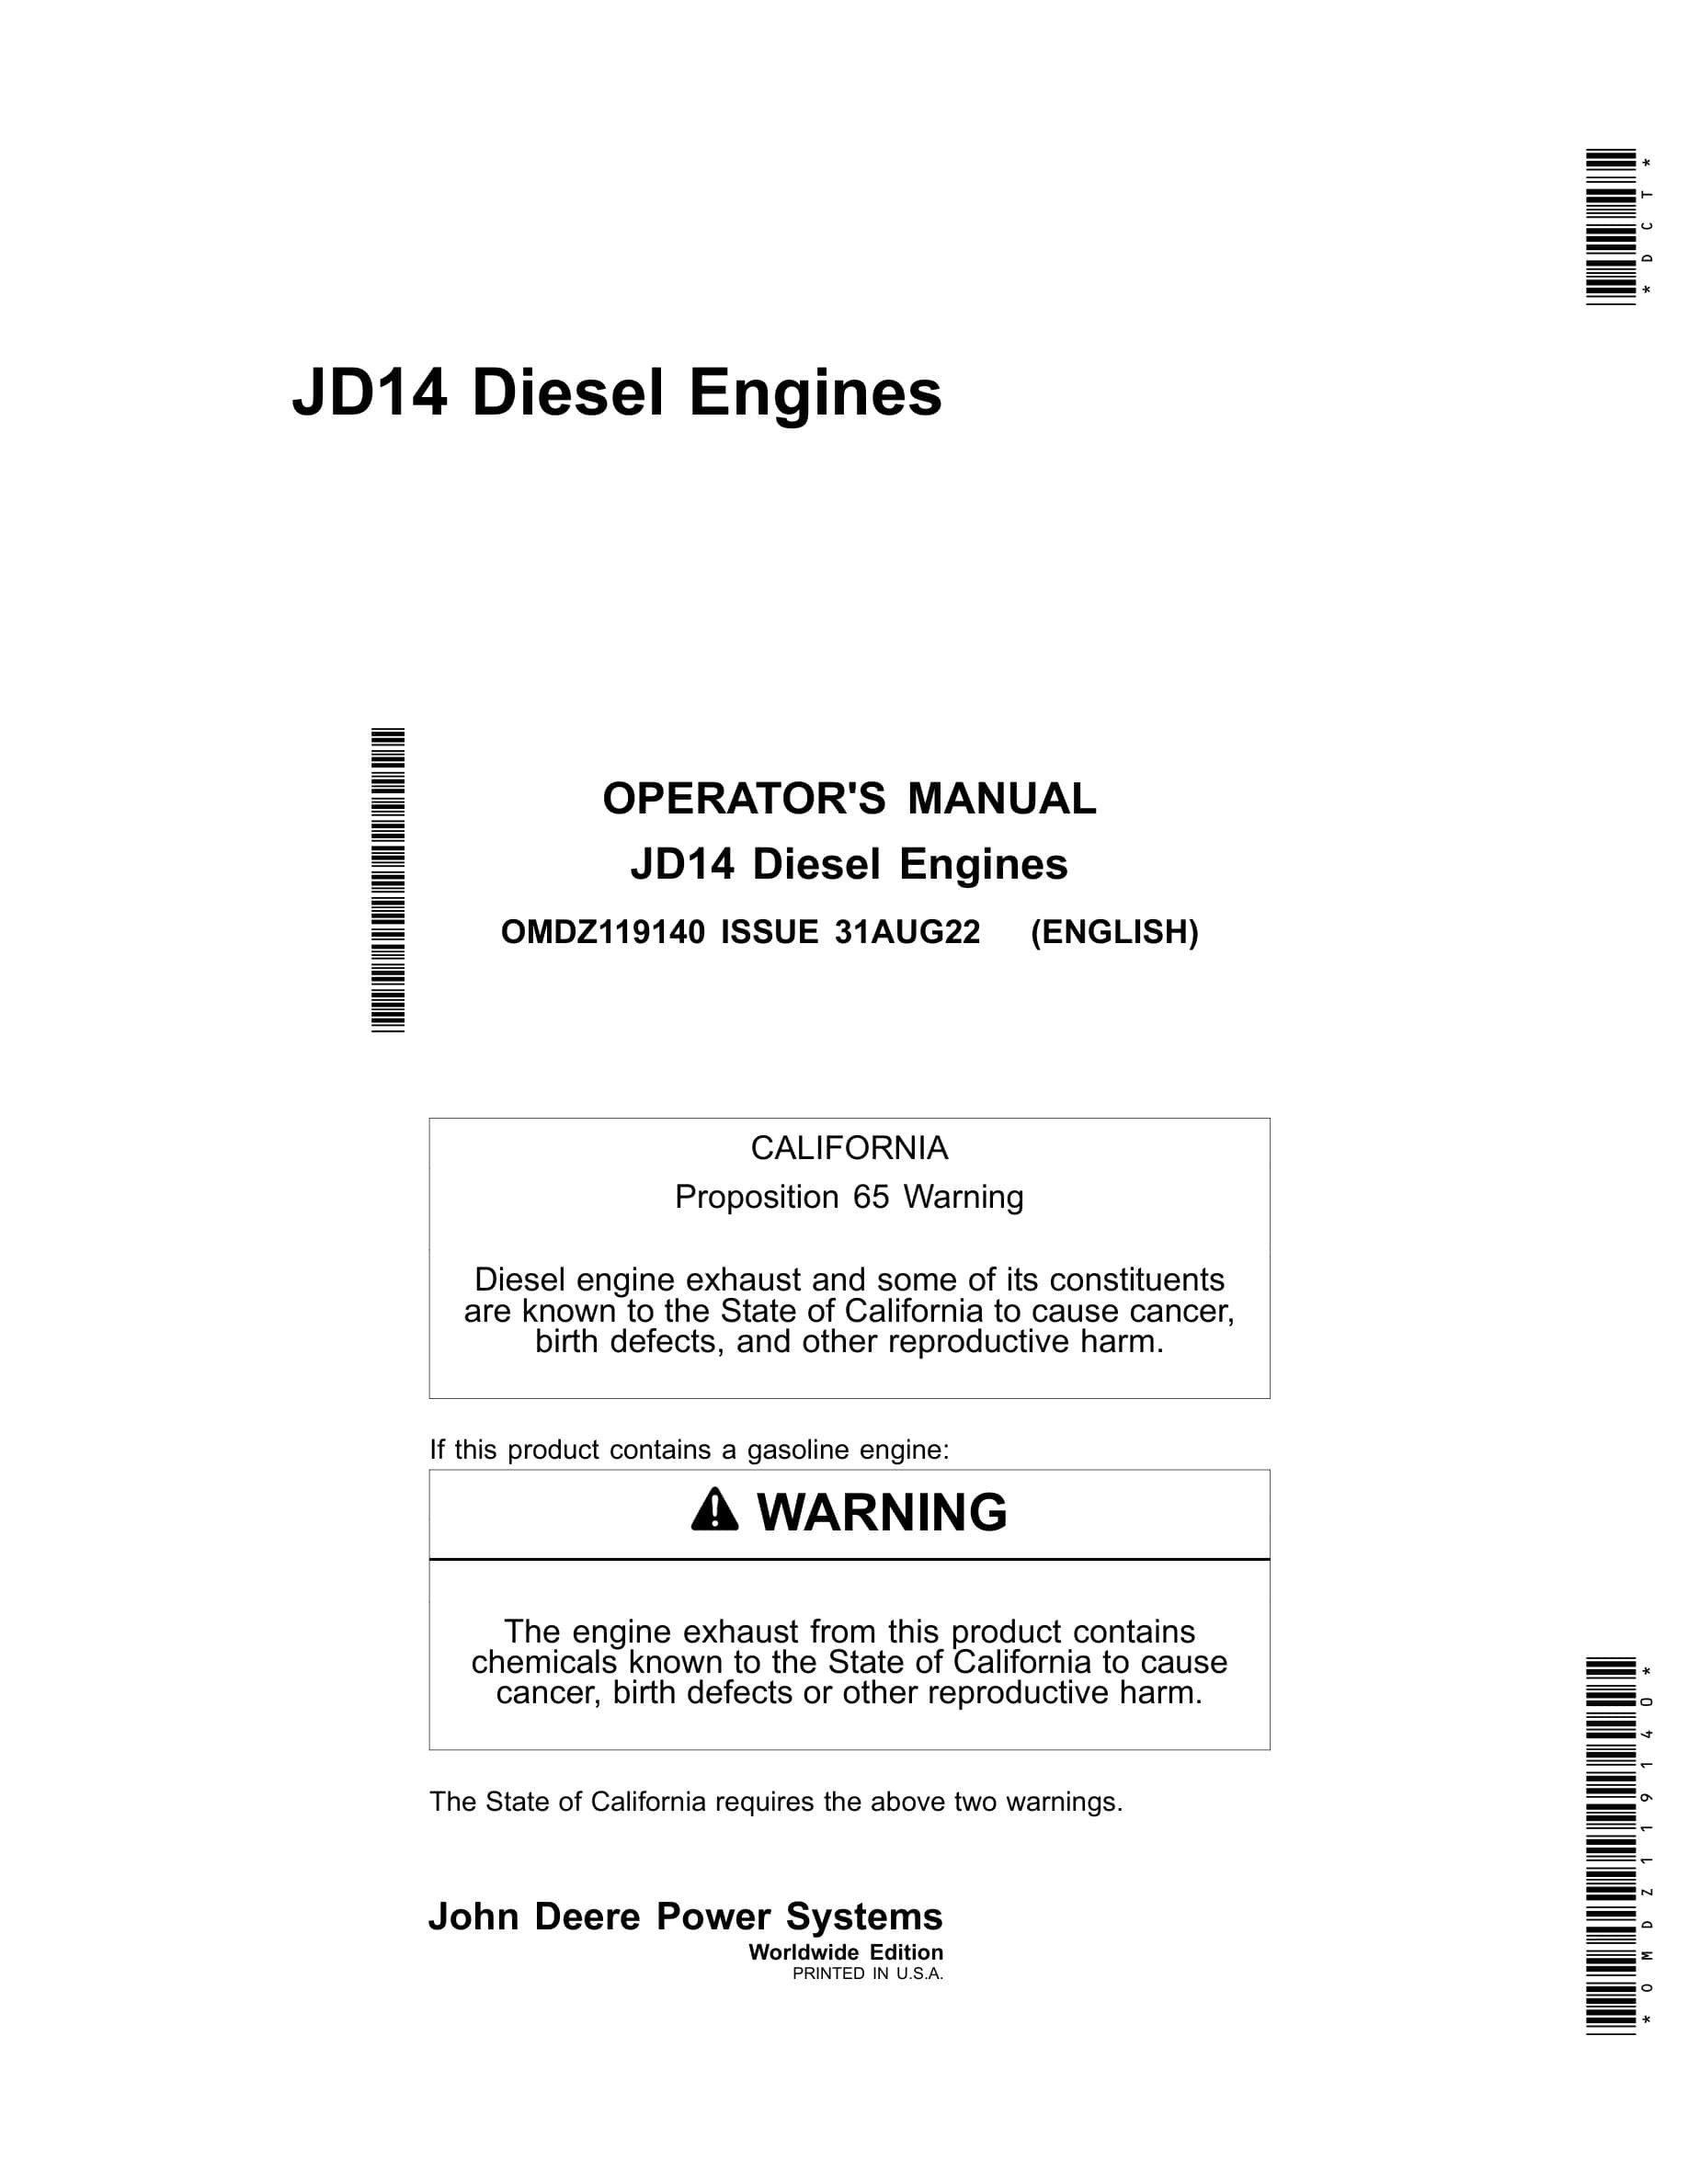 John Deere PowerTech JD14 Diesel Engines Operator Manual OMDZ119140-1